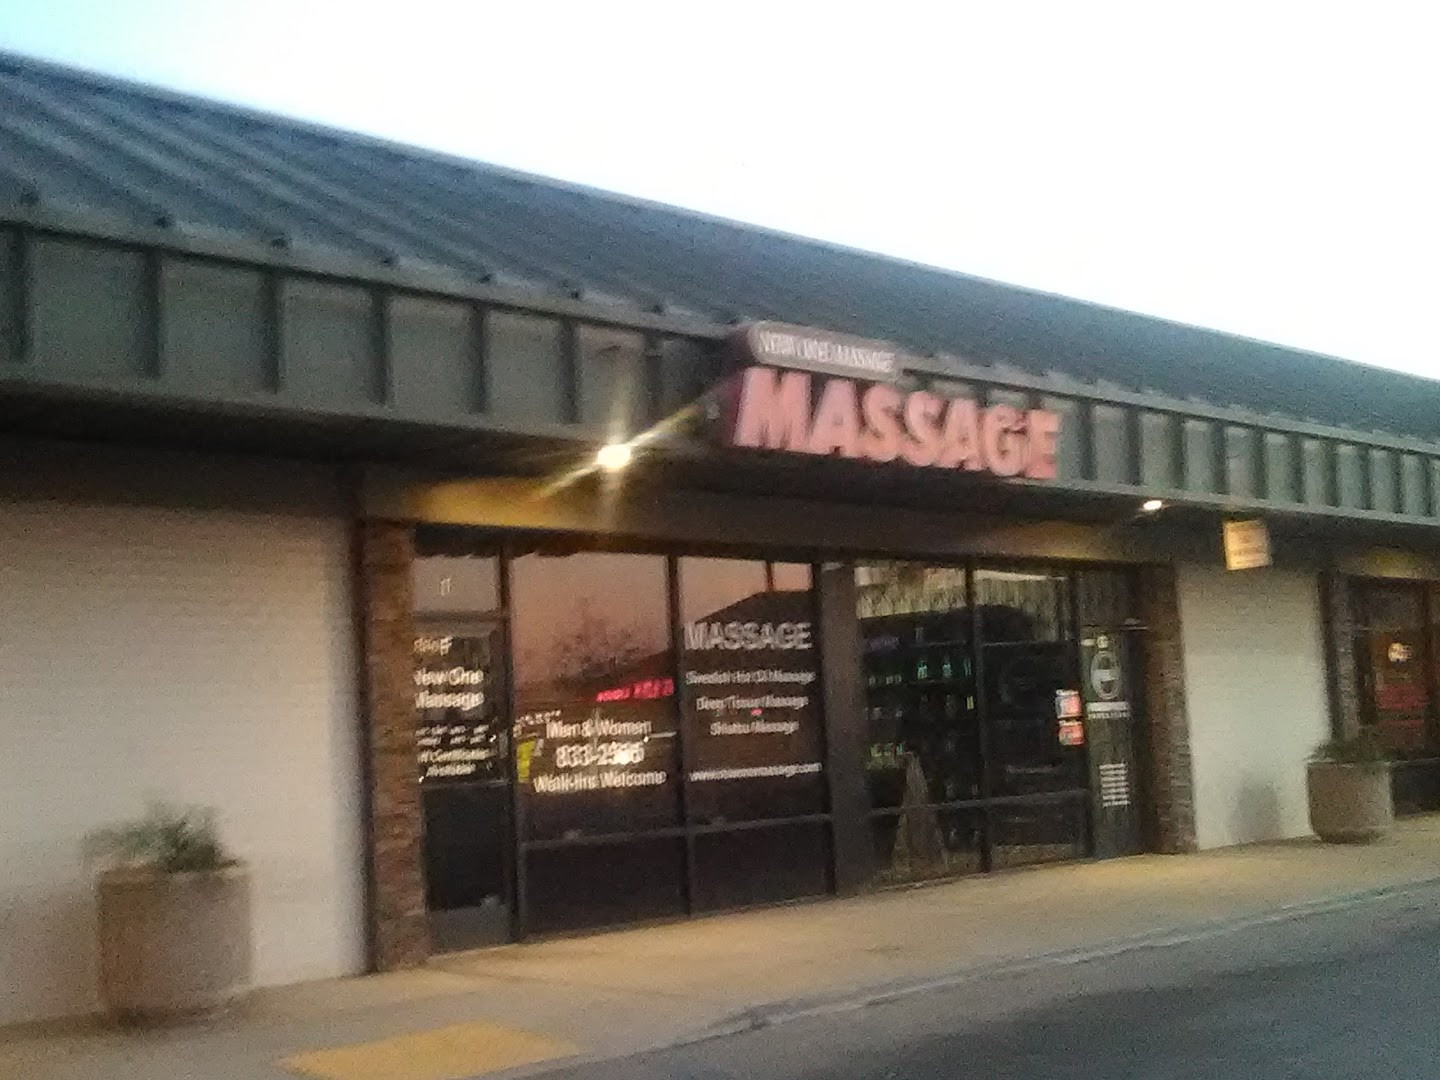 New One Massage - Bakersfield